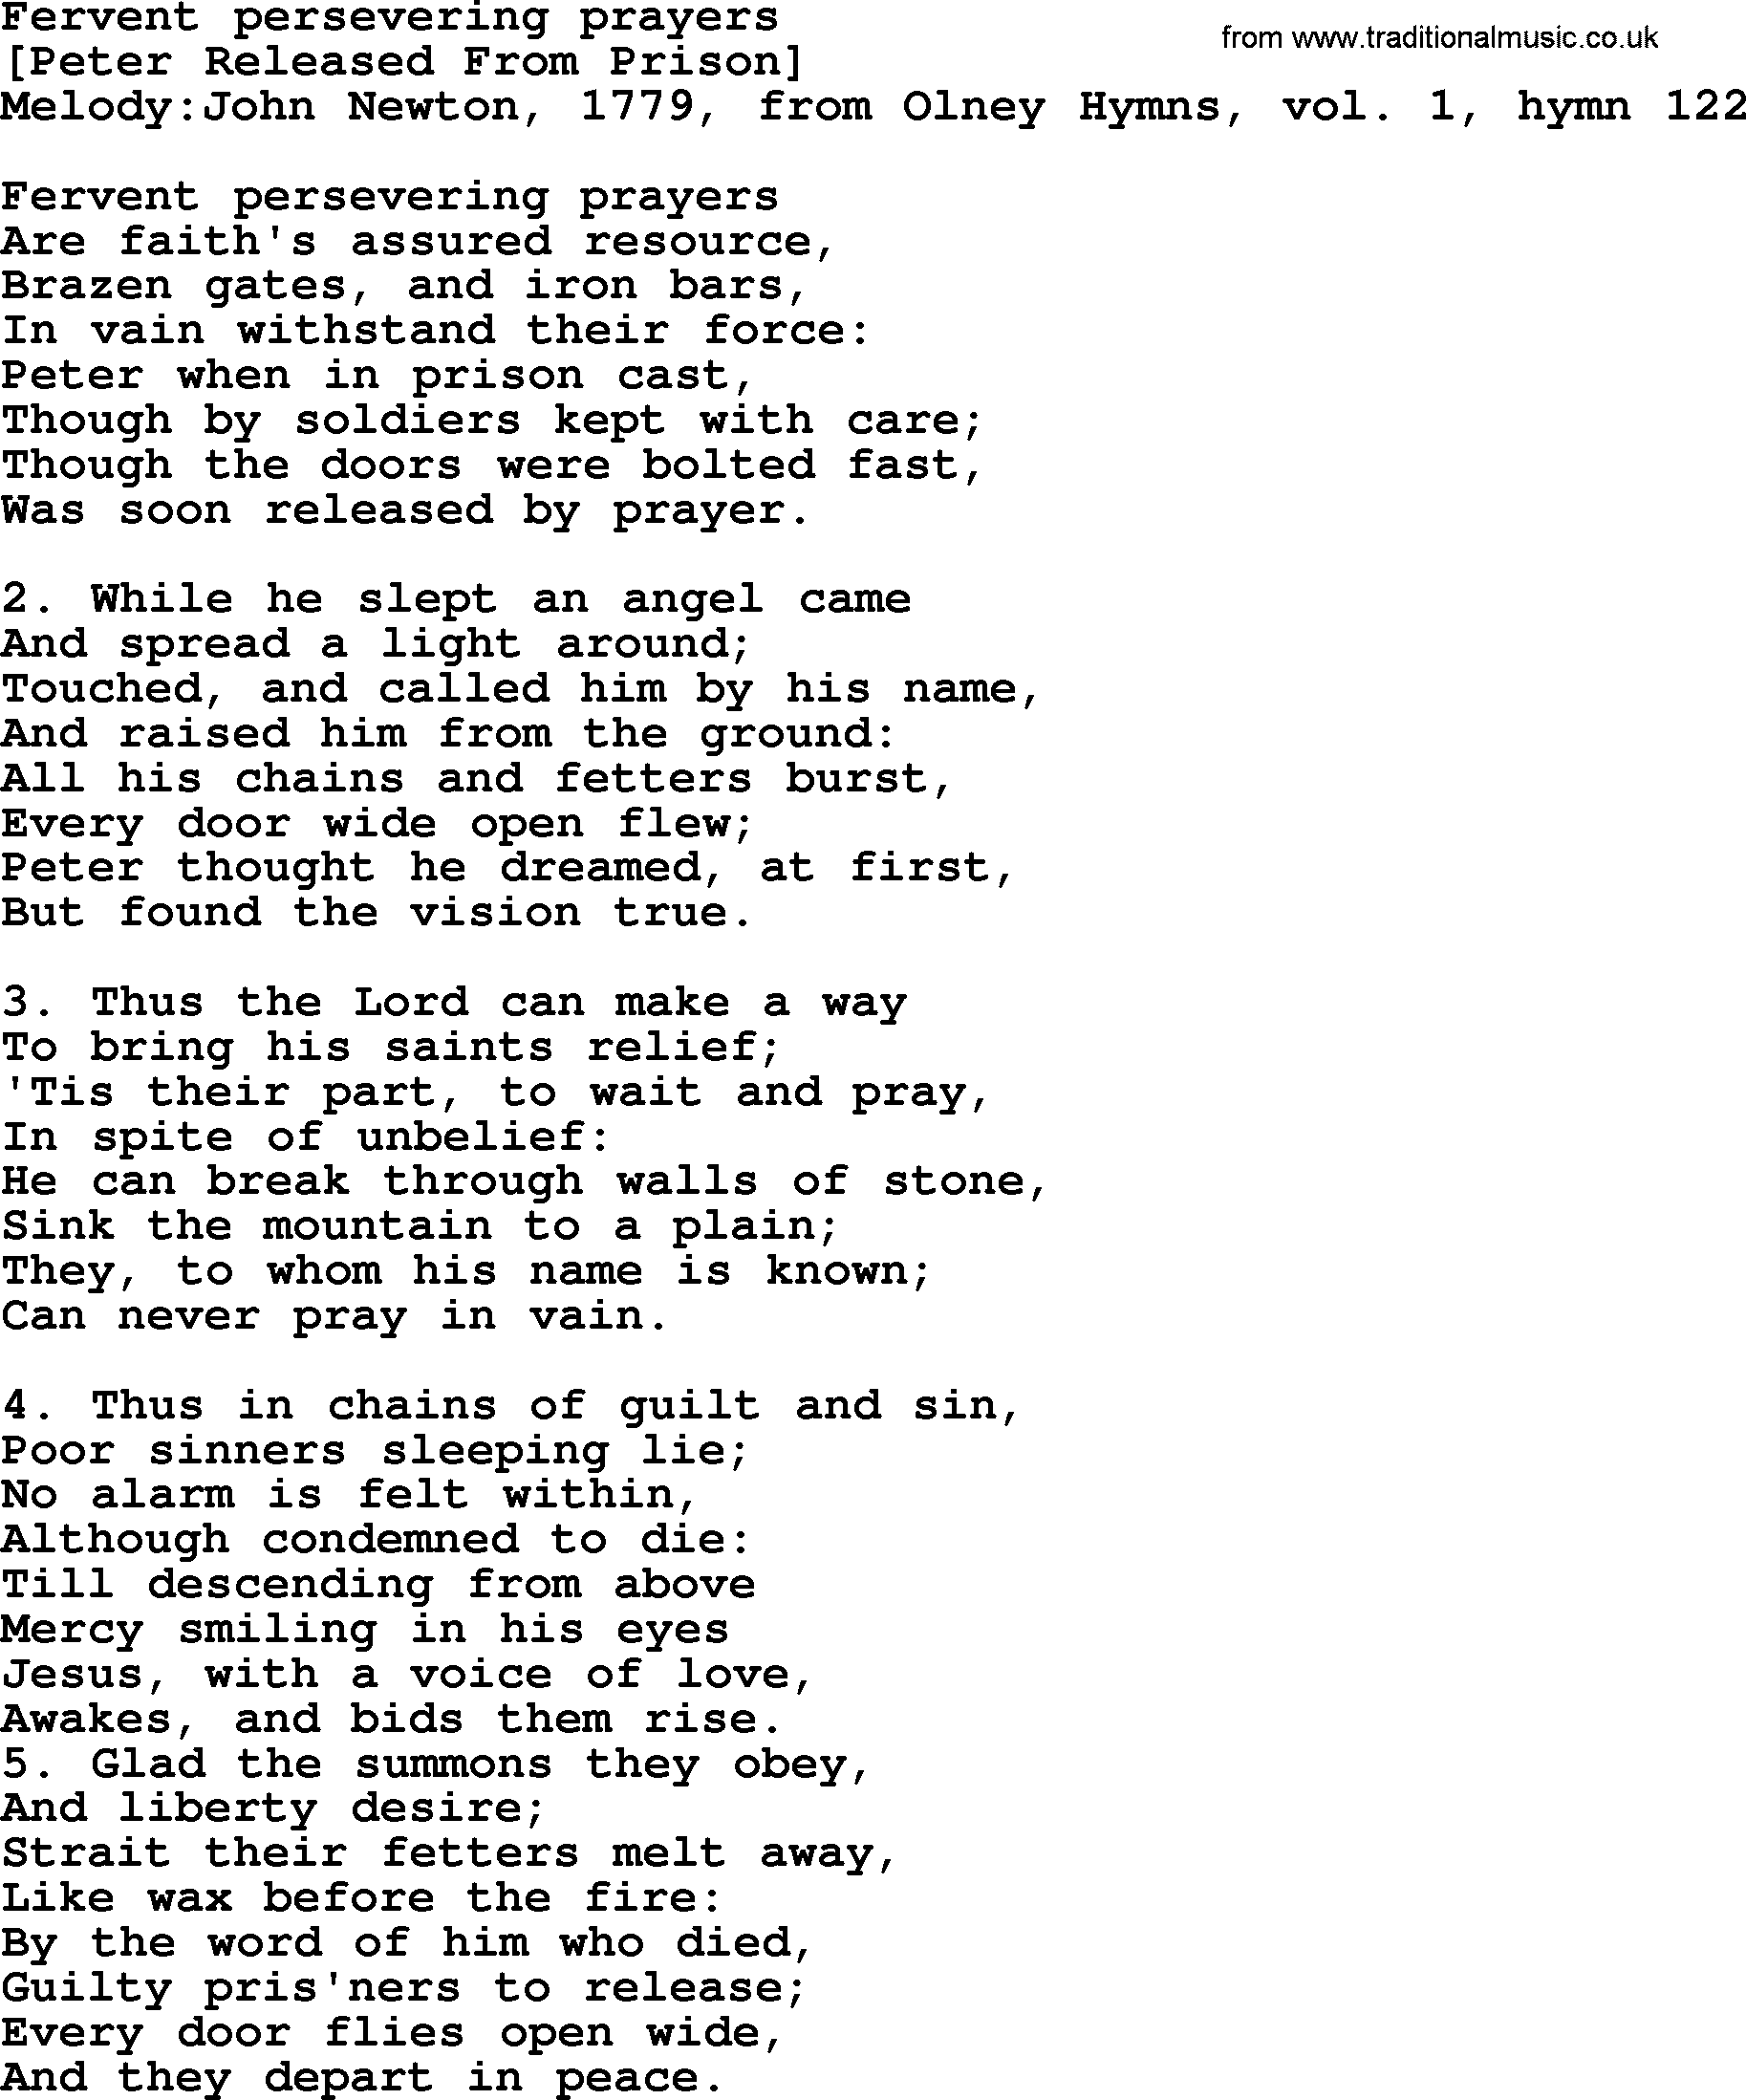 Old English Song: Fervent Persevering Prayers lyrics